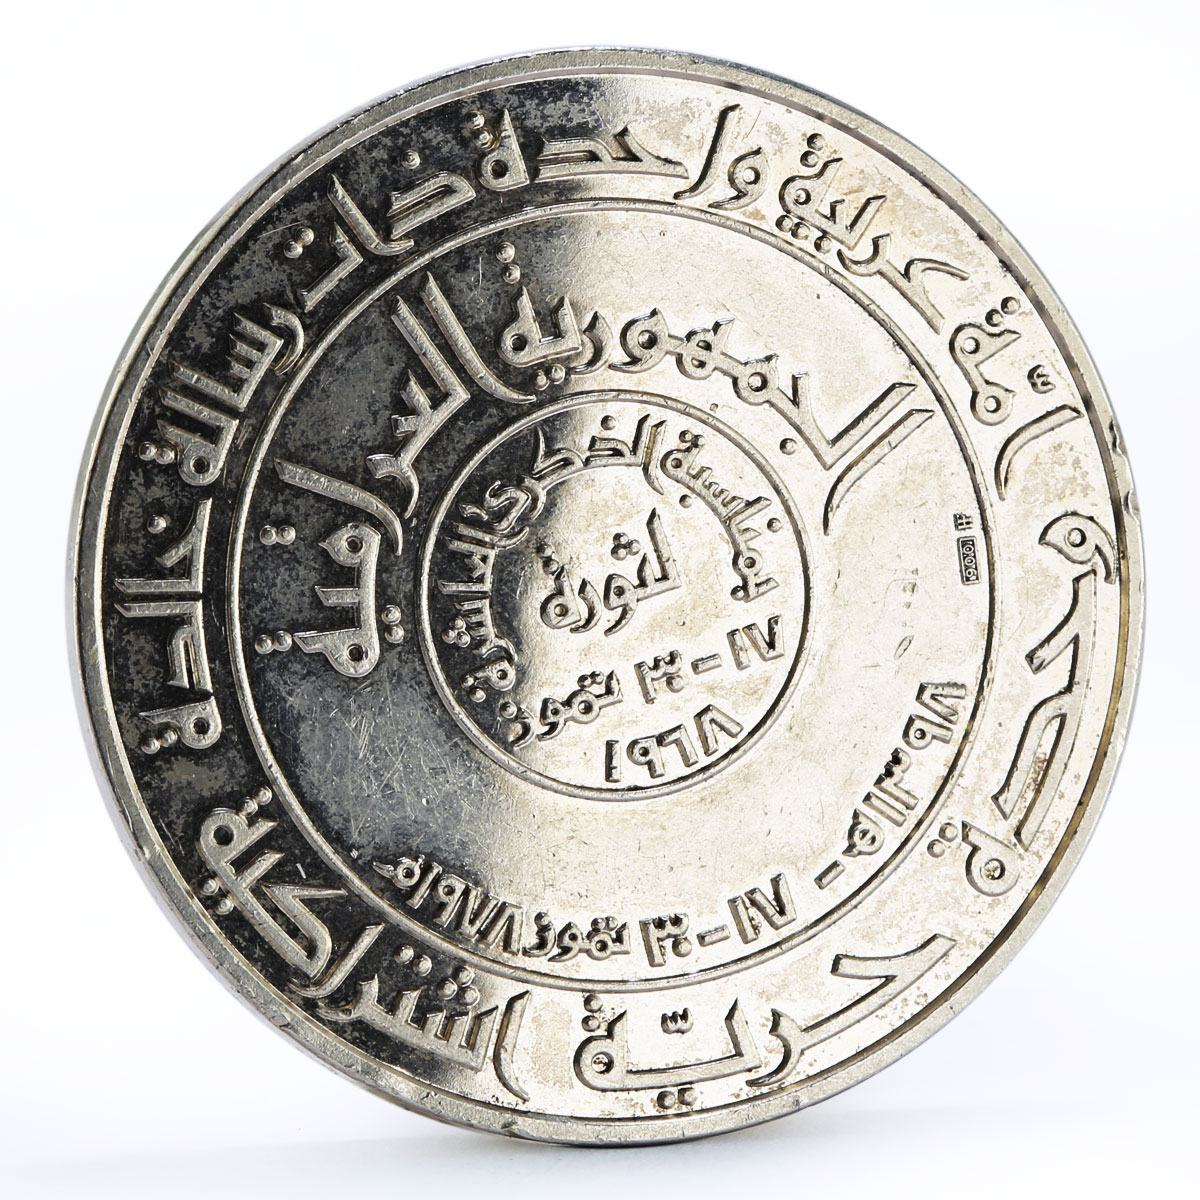 Iraq 1 dinar 10th Anniversary of the Revolution silver coin 1978